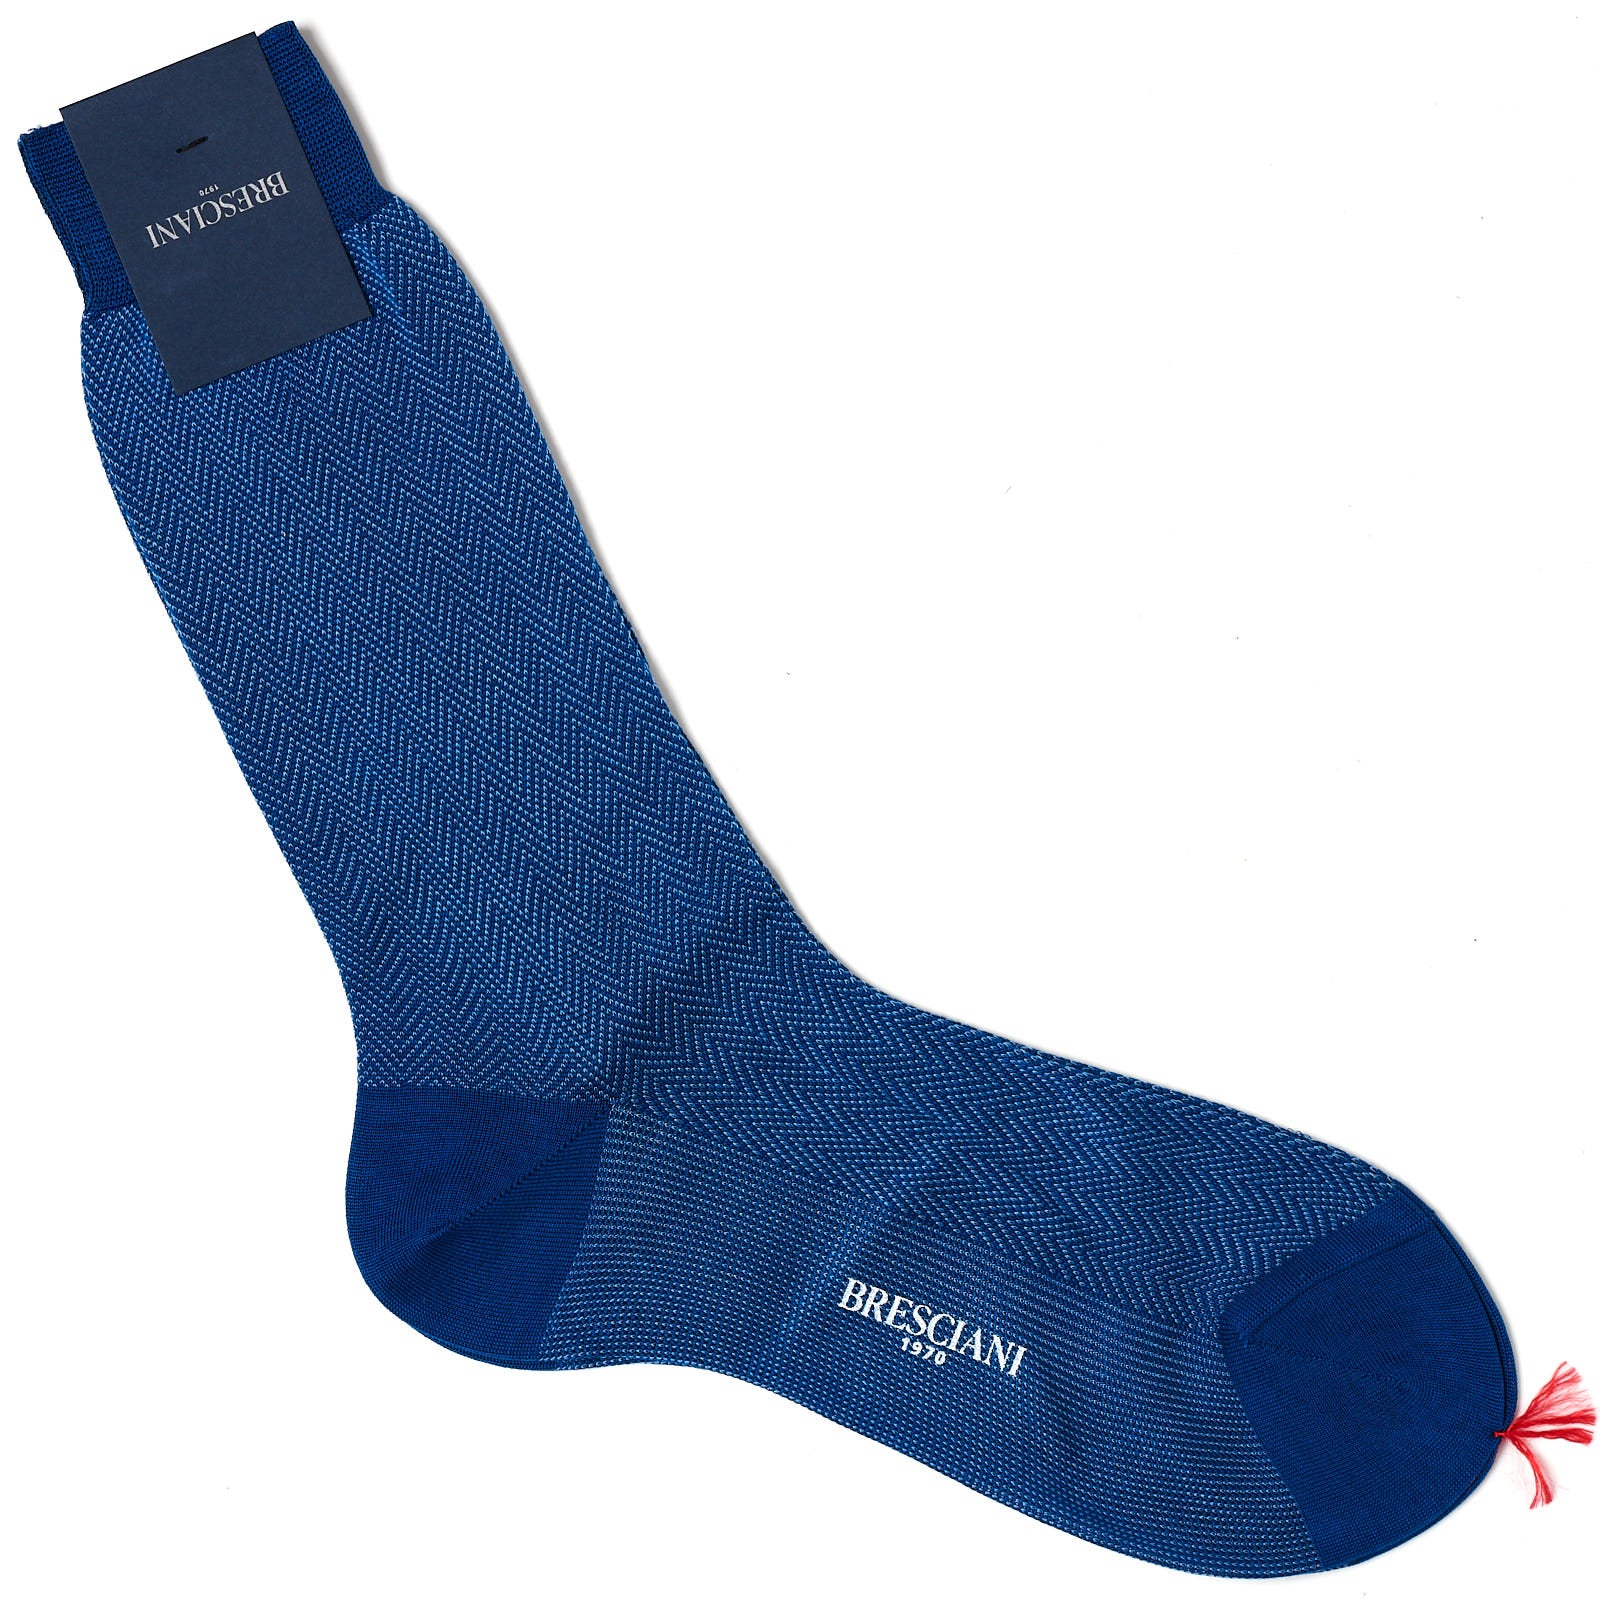 BRESCIANI Cotton Geometry Design Mid Calf Length Socks M-L